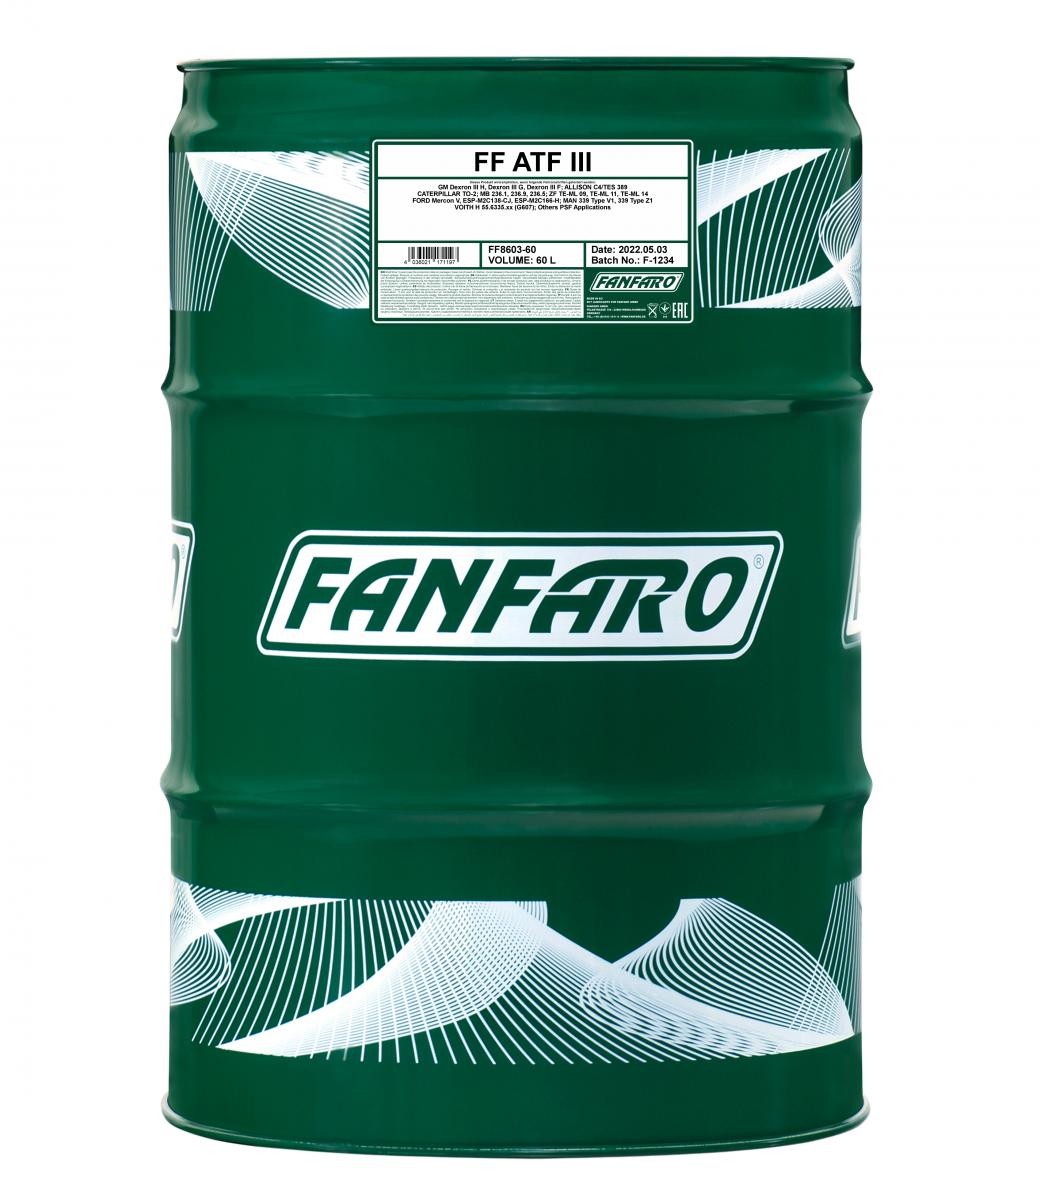 FF8603-60 FANFARO Automatikgetriebeöl VOLVO FL III